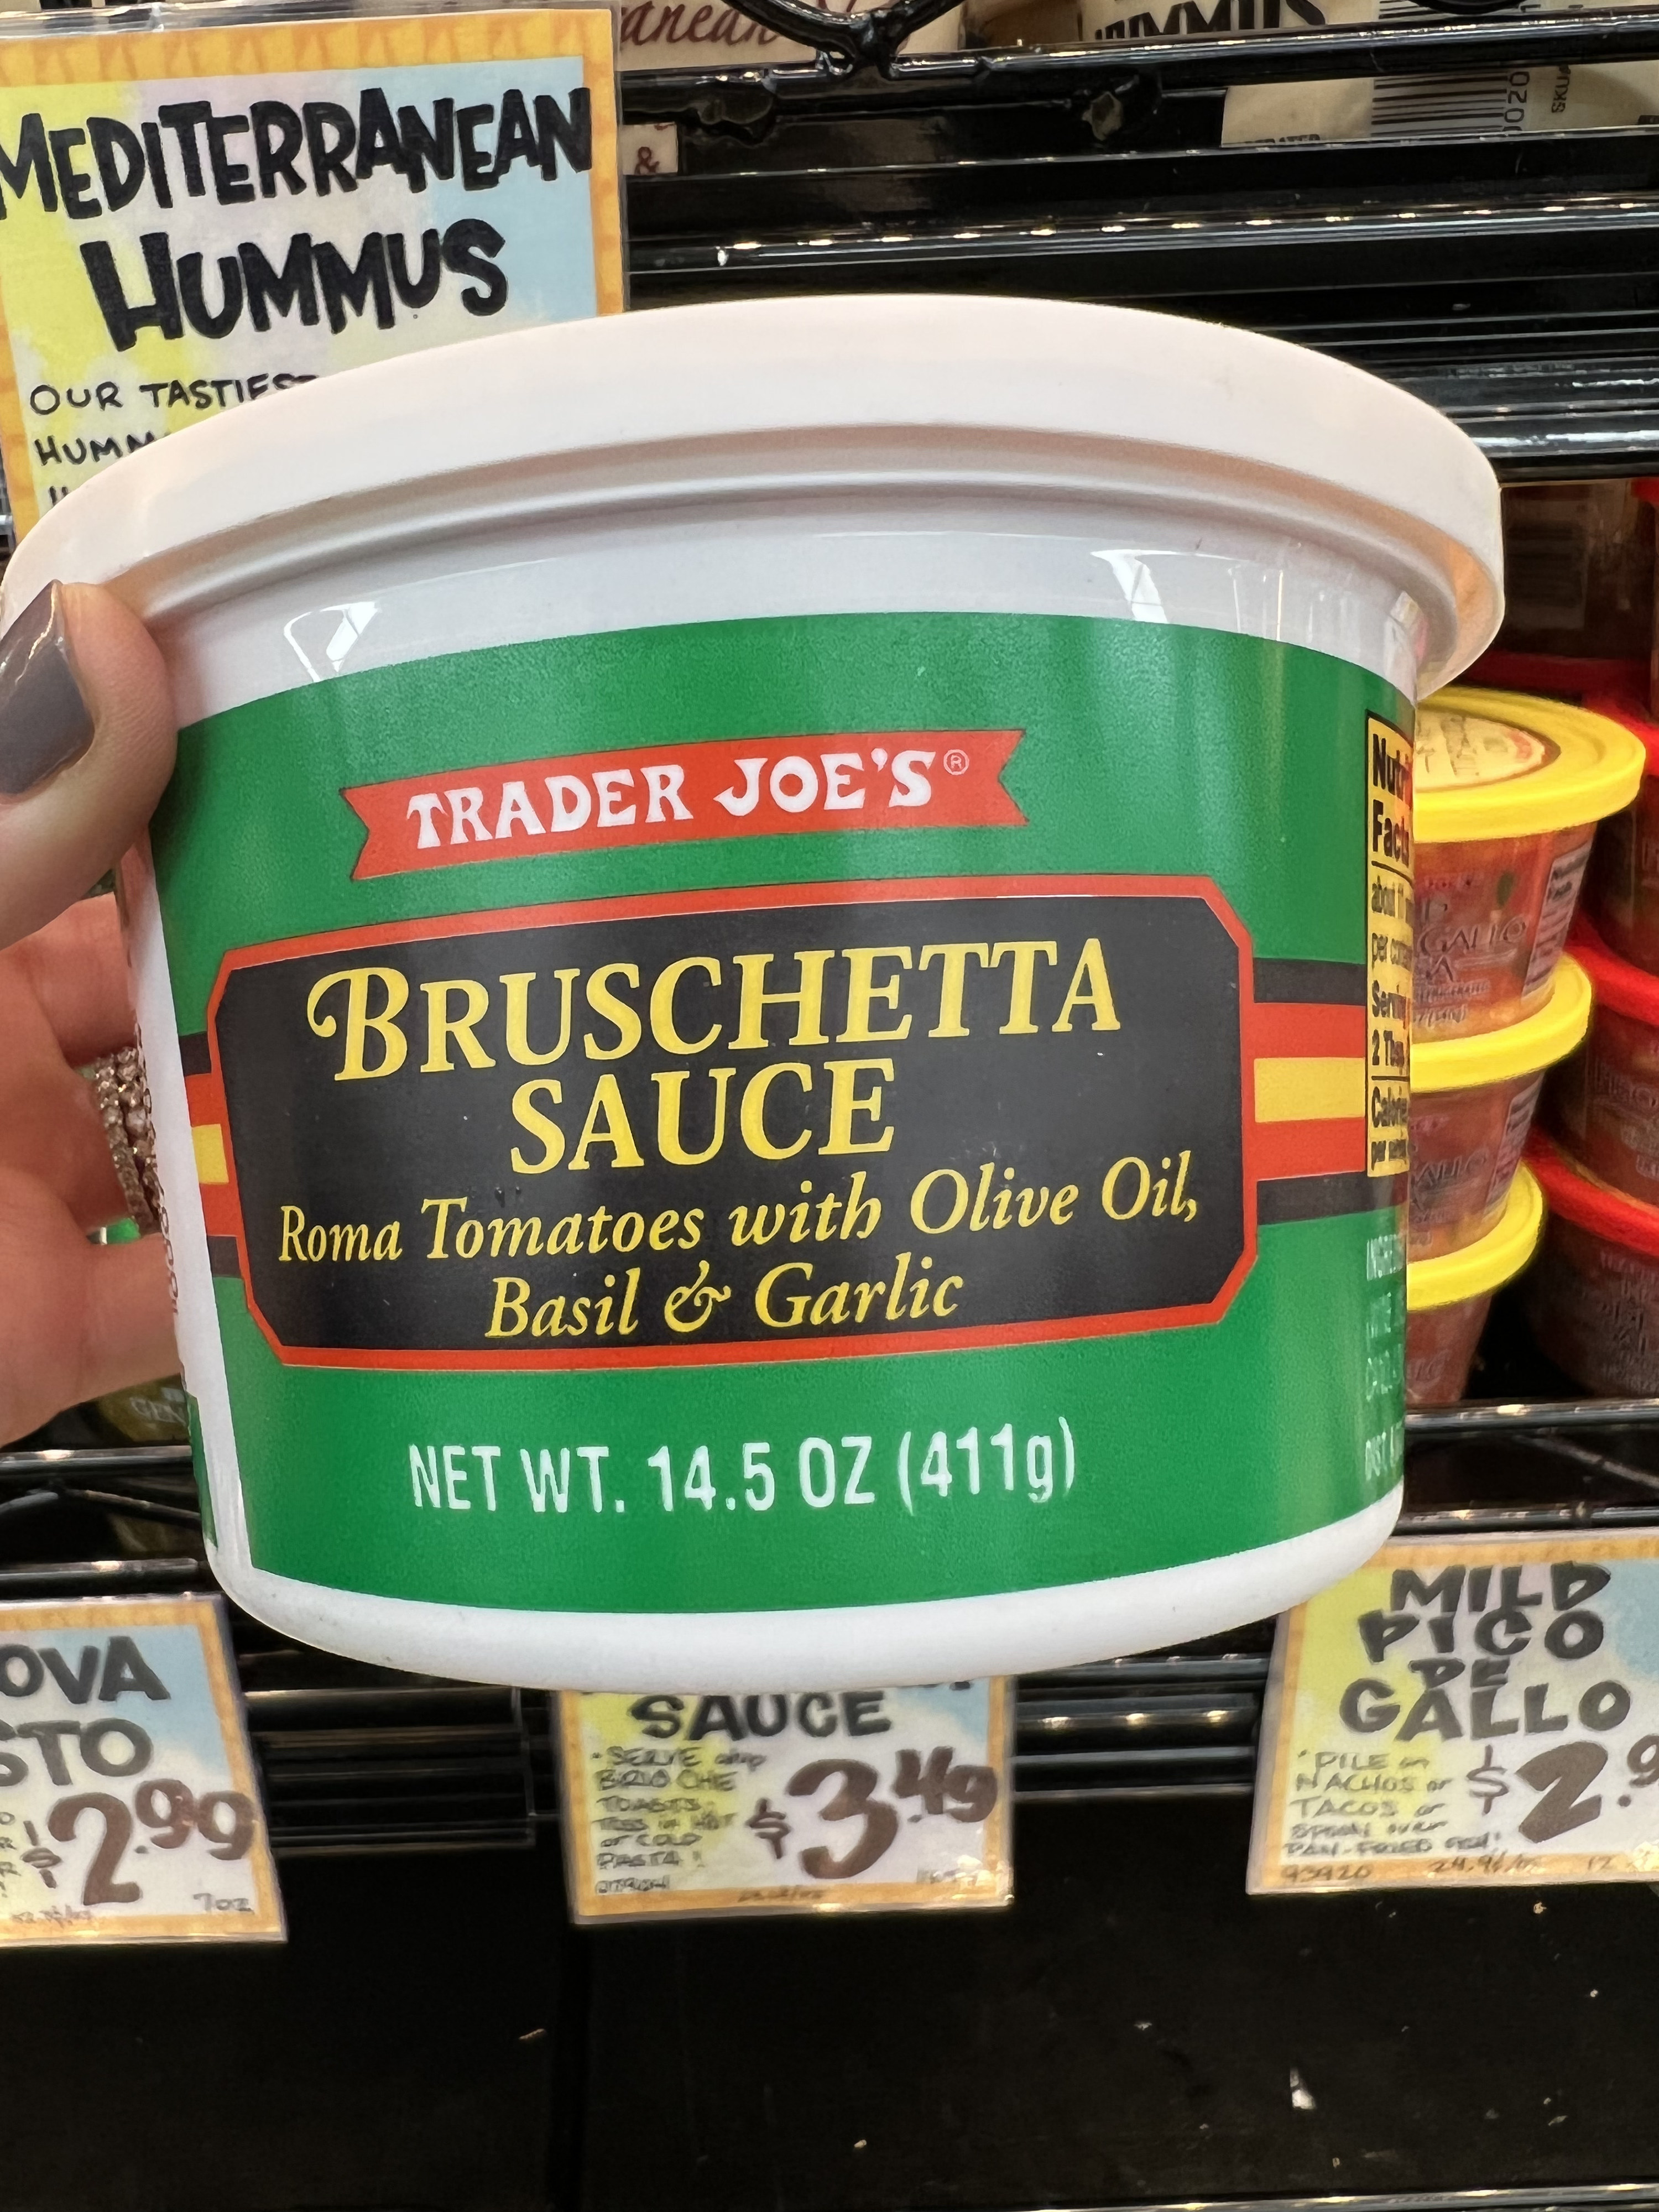 A container of Bruschetta Sauce.